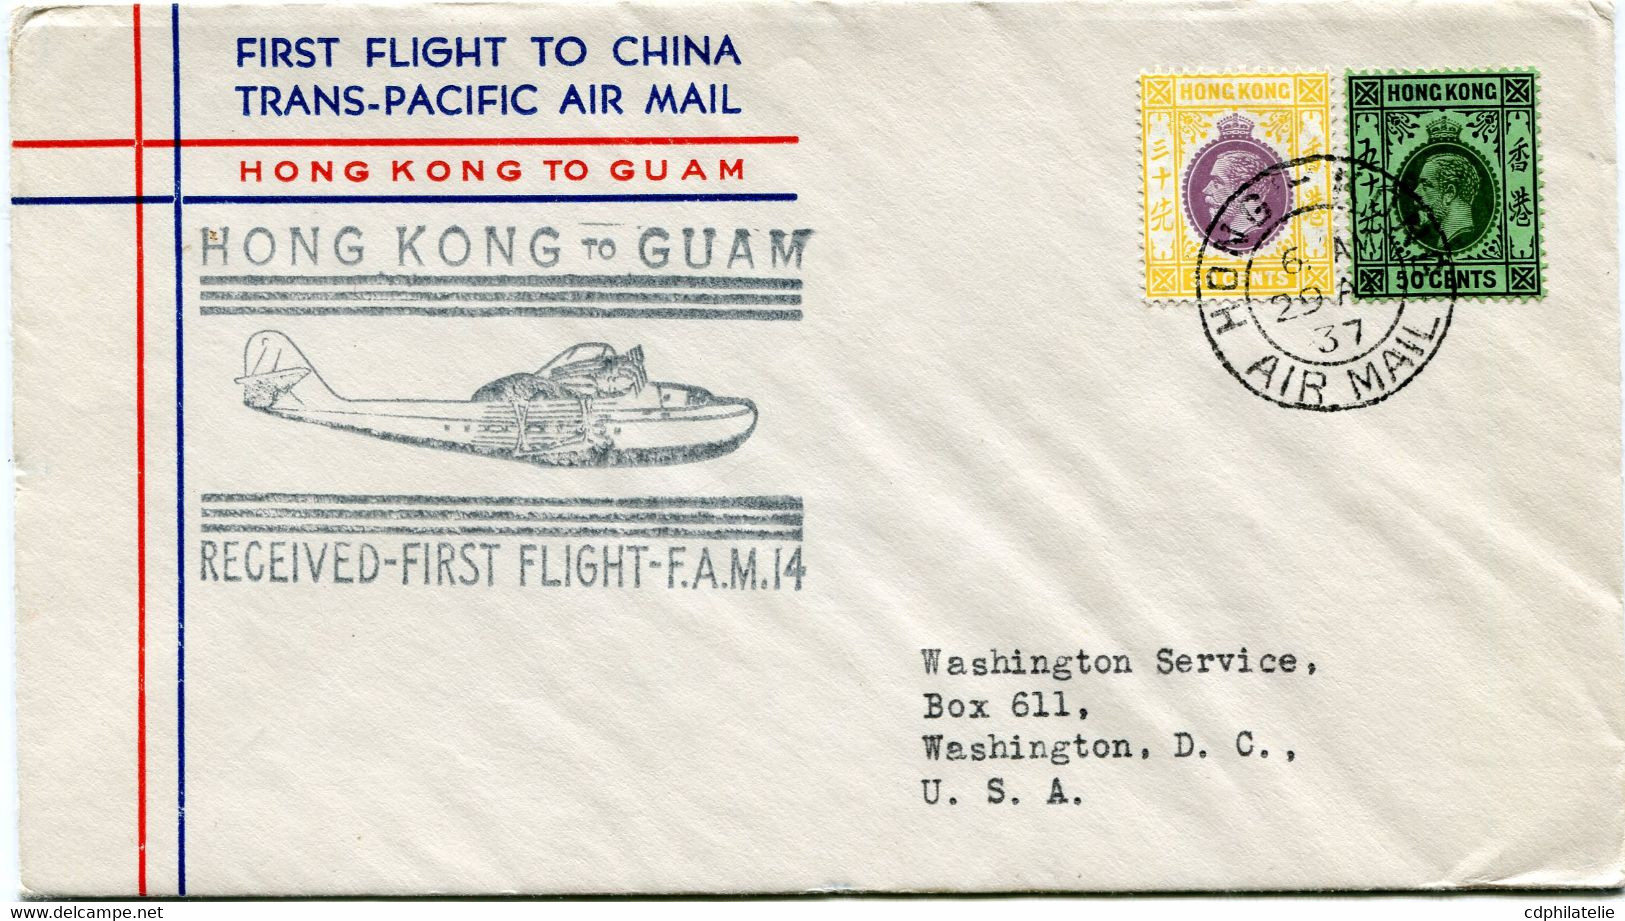 HONG KONG LETTRE "FIRST FLIGHT TO CHINA TRANS-PACIFIC AIR MAIL HONG KONG TO GUAM" AVEC CACHET ILL "HONG KONG TO GUAM..." - Covers & Documents